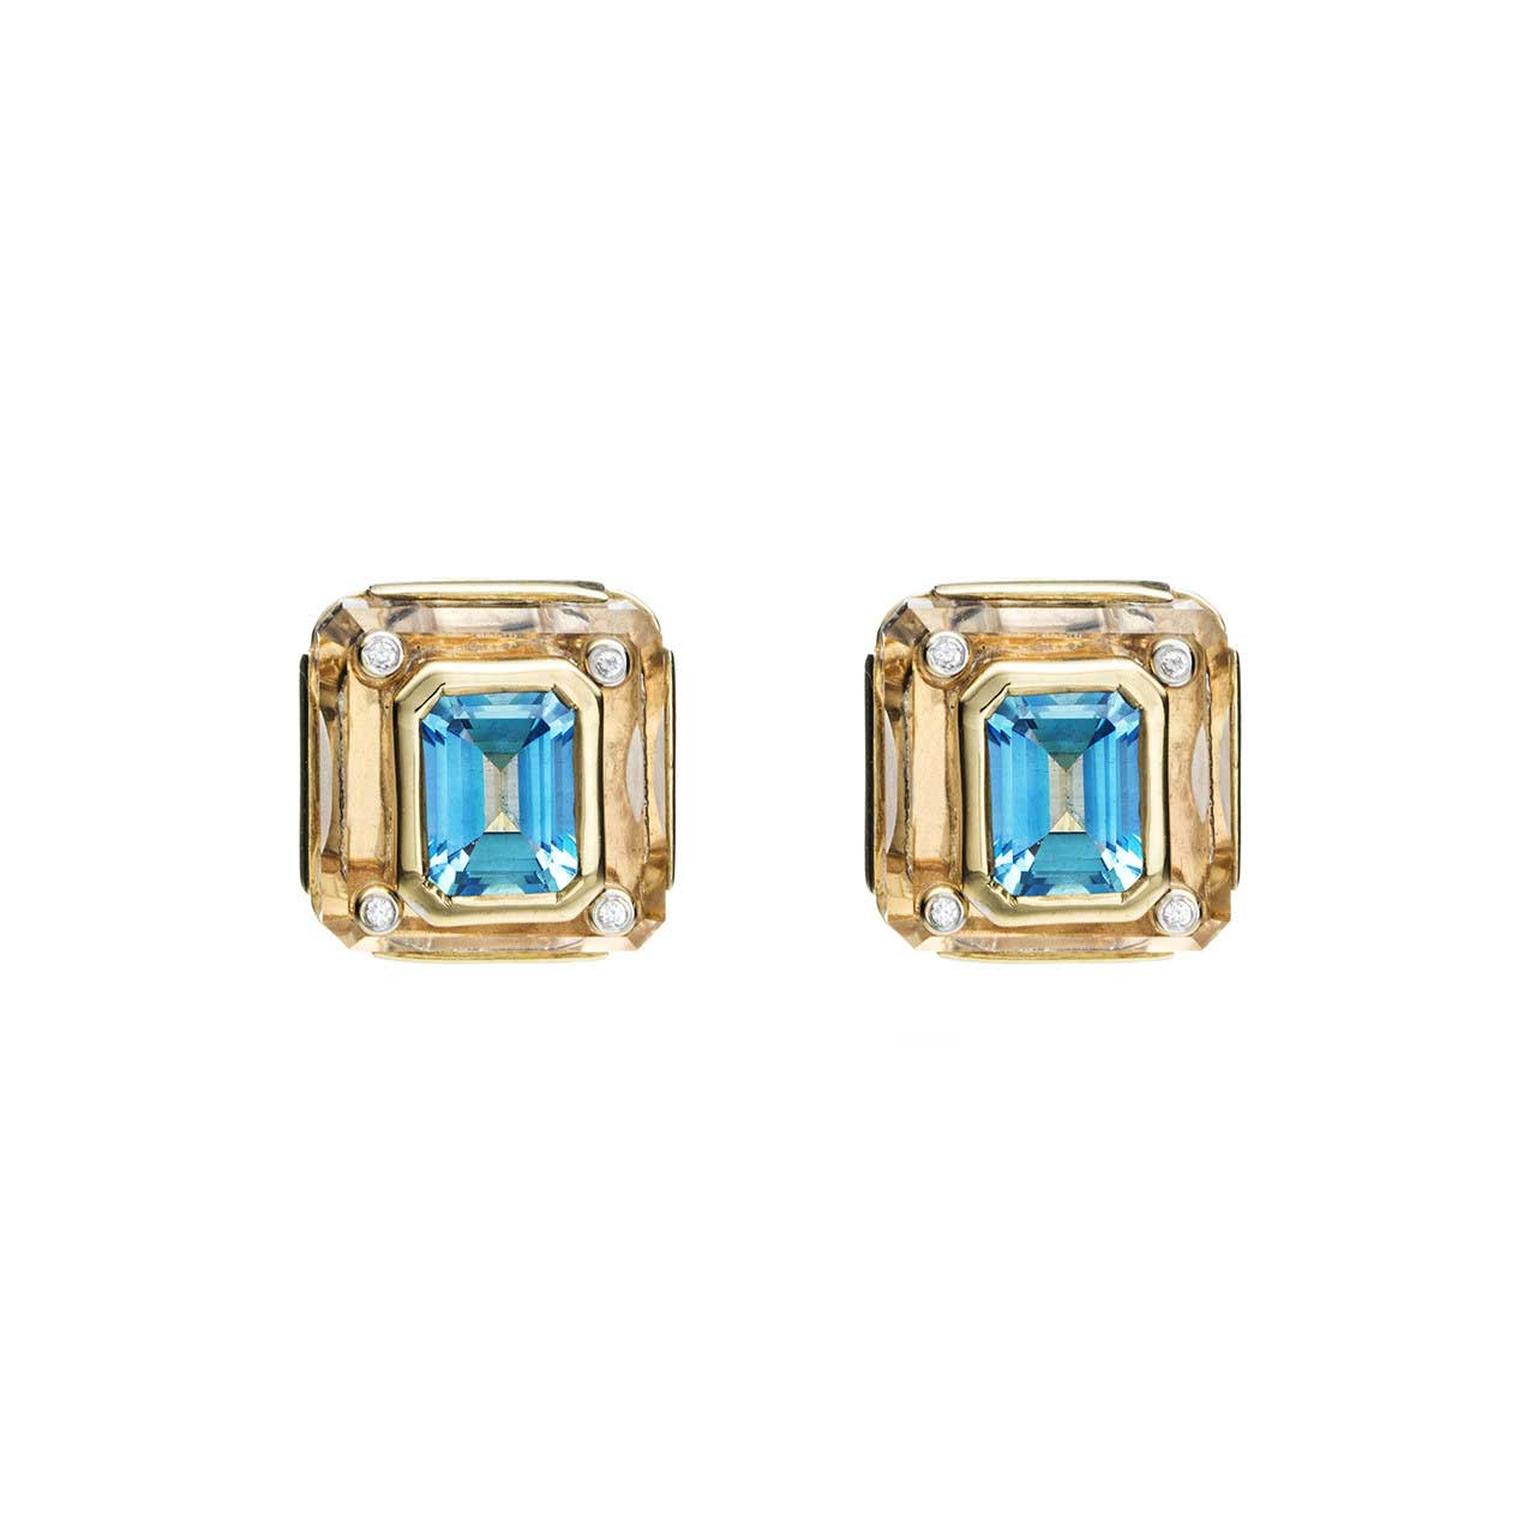 Kara Ross Cava earrings in rock crystal with blue topaz